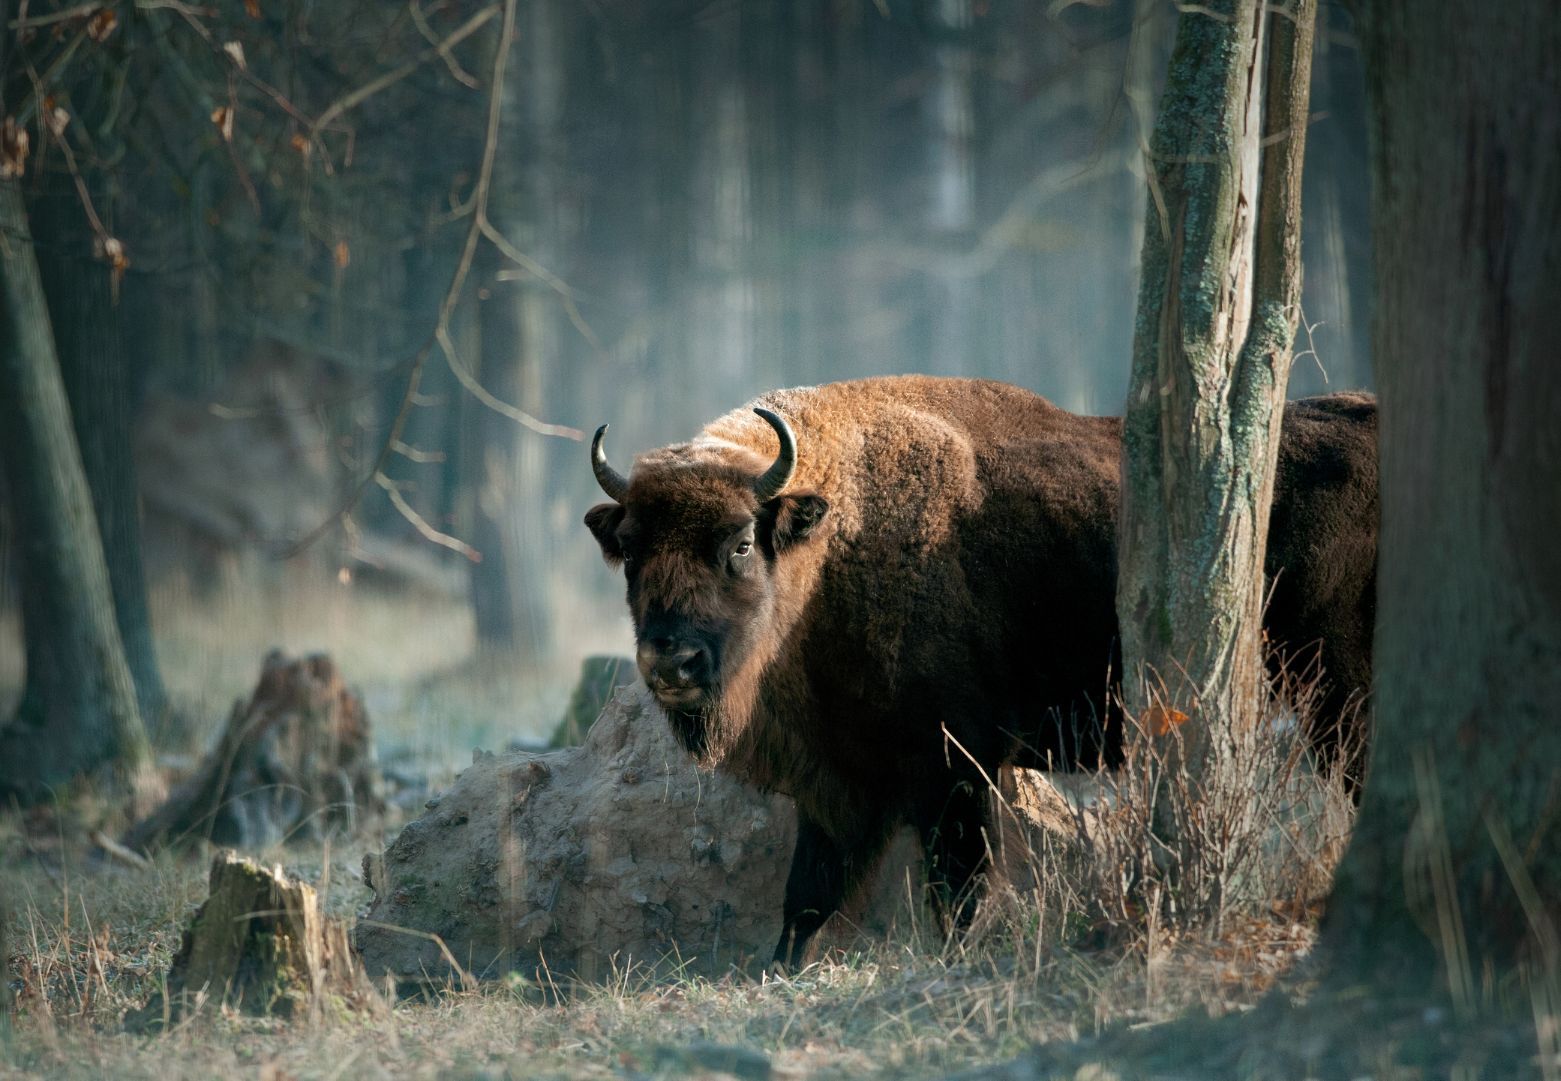 A European bison, walking through a shady forest.